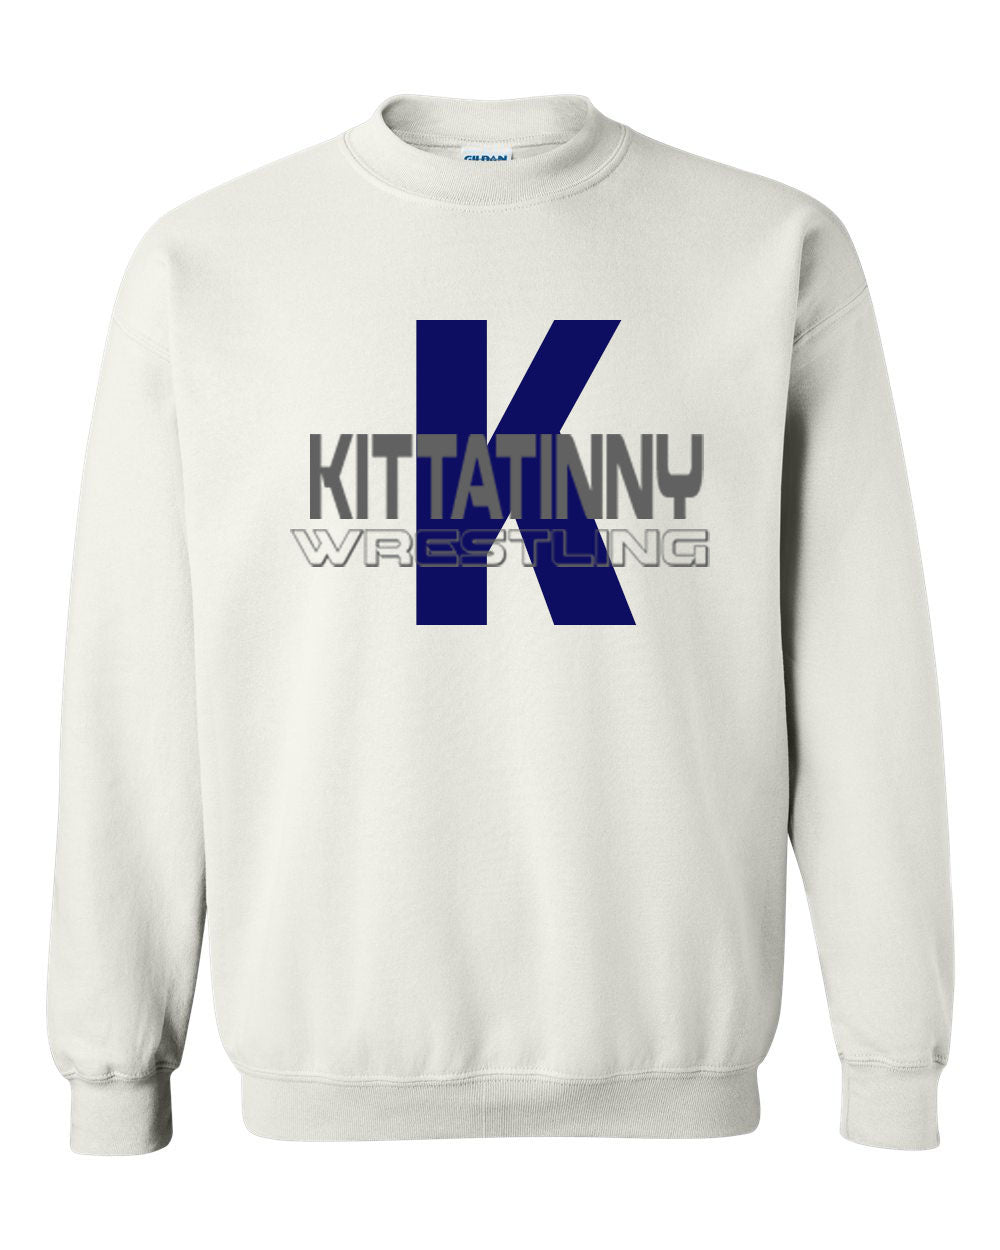 Kittatinny Wrestling Design 5 non hooded sweatshirt